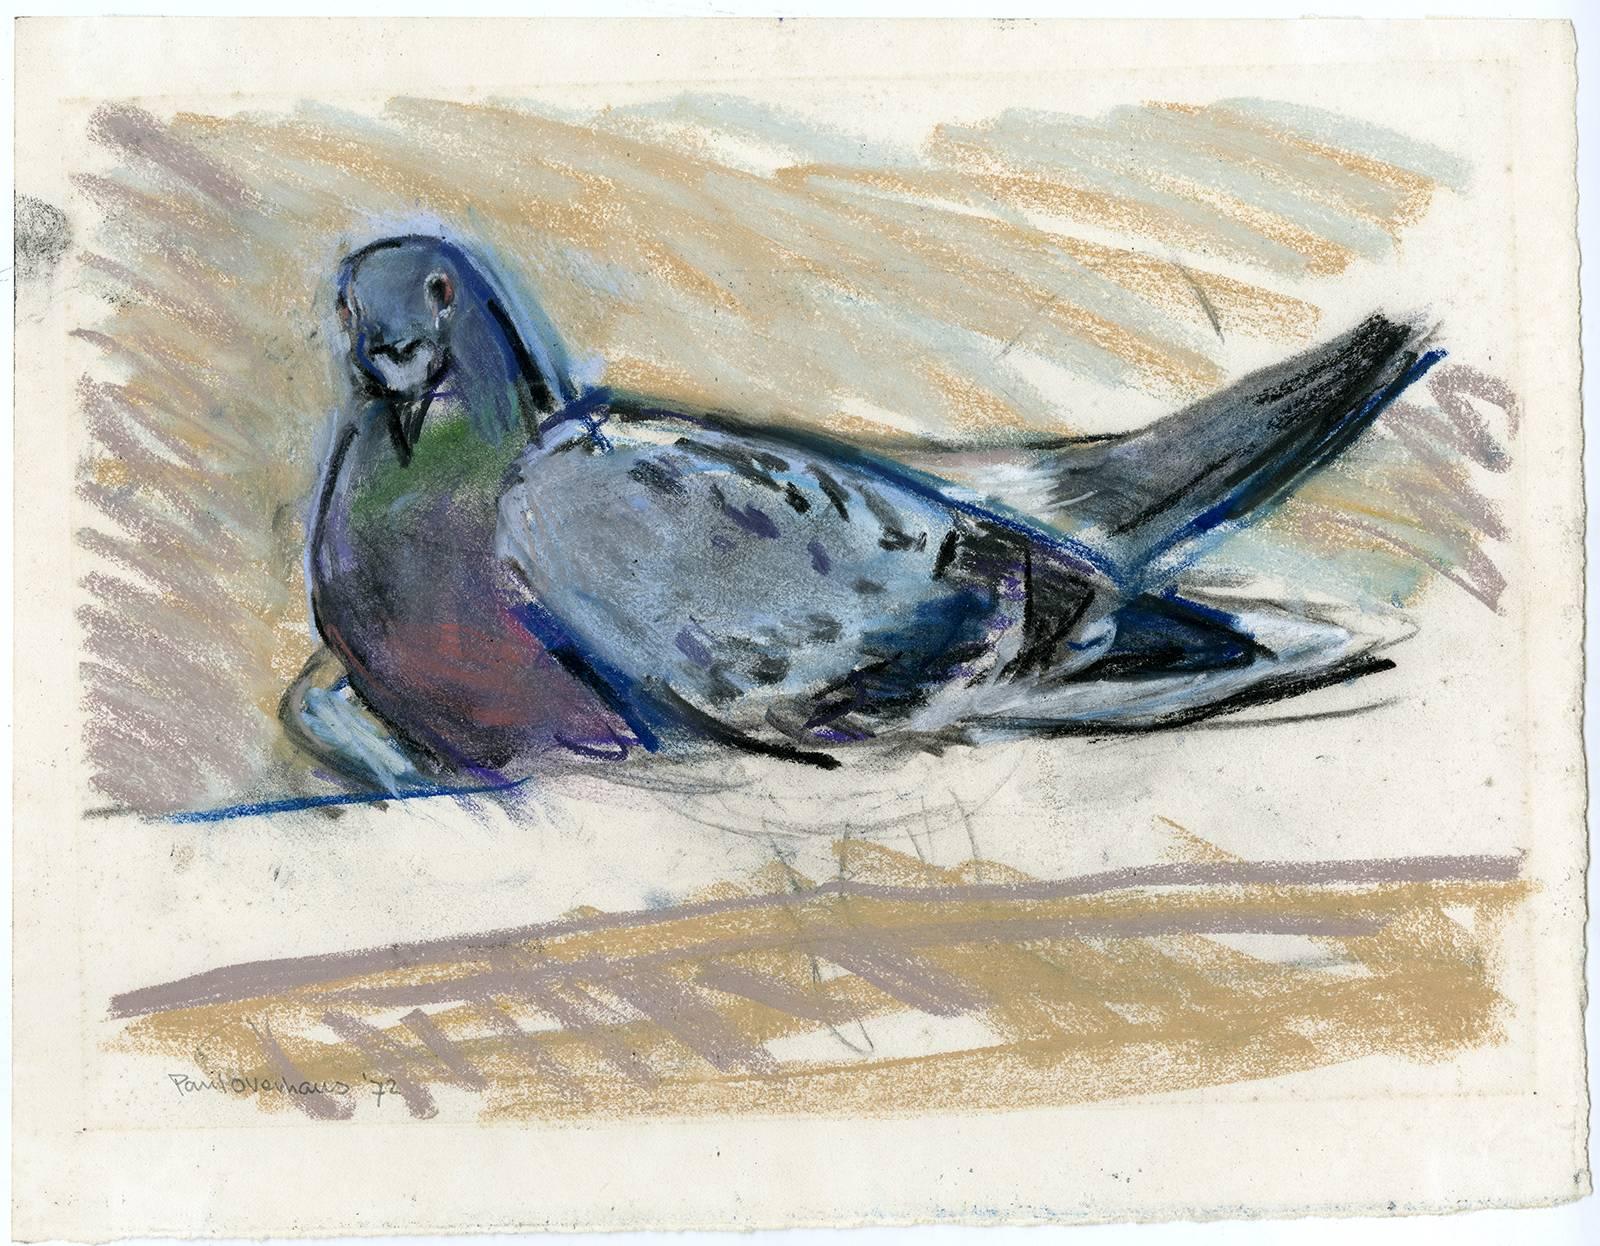 Paul Overhaus Animal Art - Untitled - A sitting pigeon/dove.